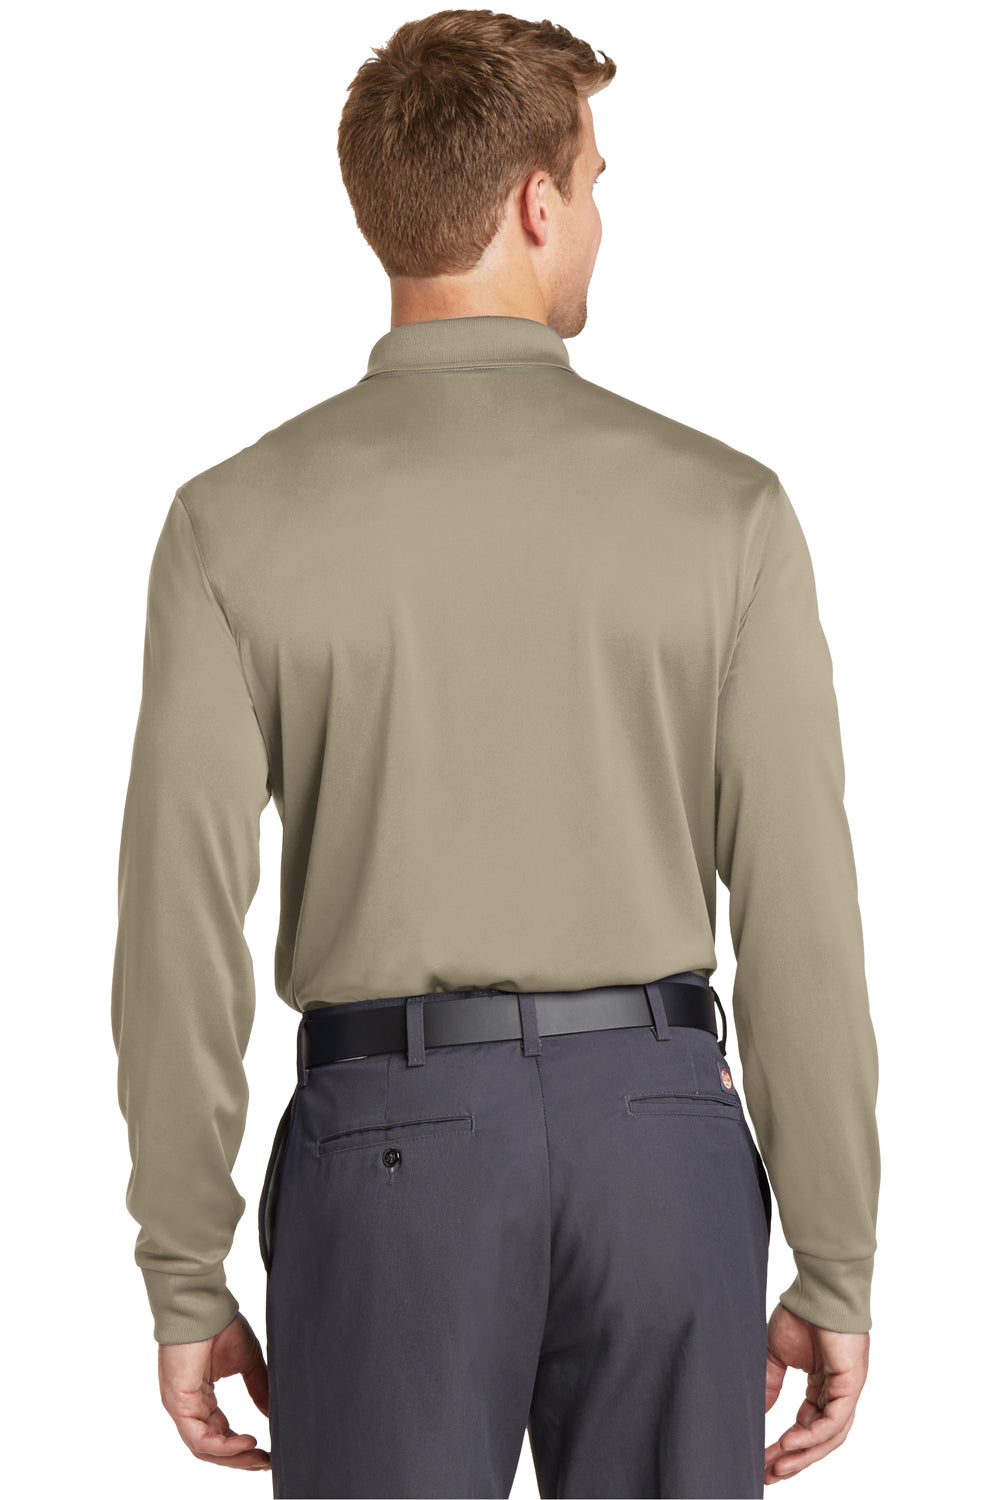 CornerStone CS412LS Mens Select Moisture Wicking Long Sleeve Polo Shirt Tan Brown Back